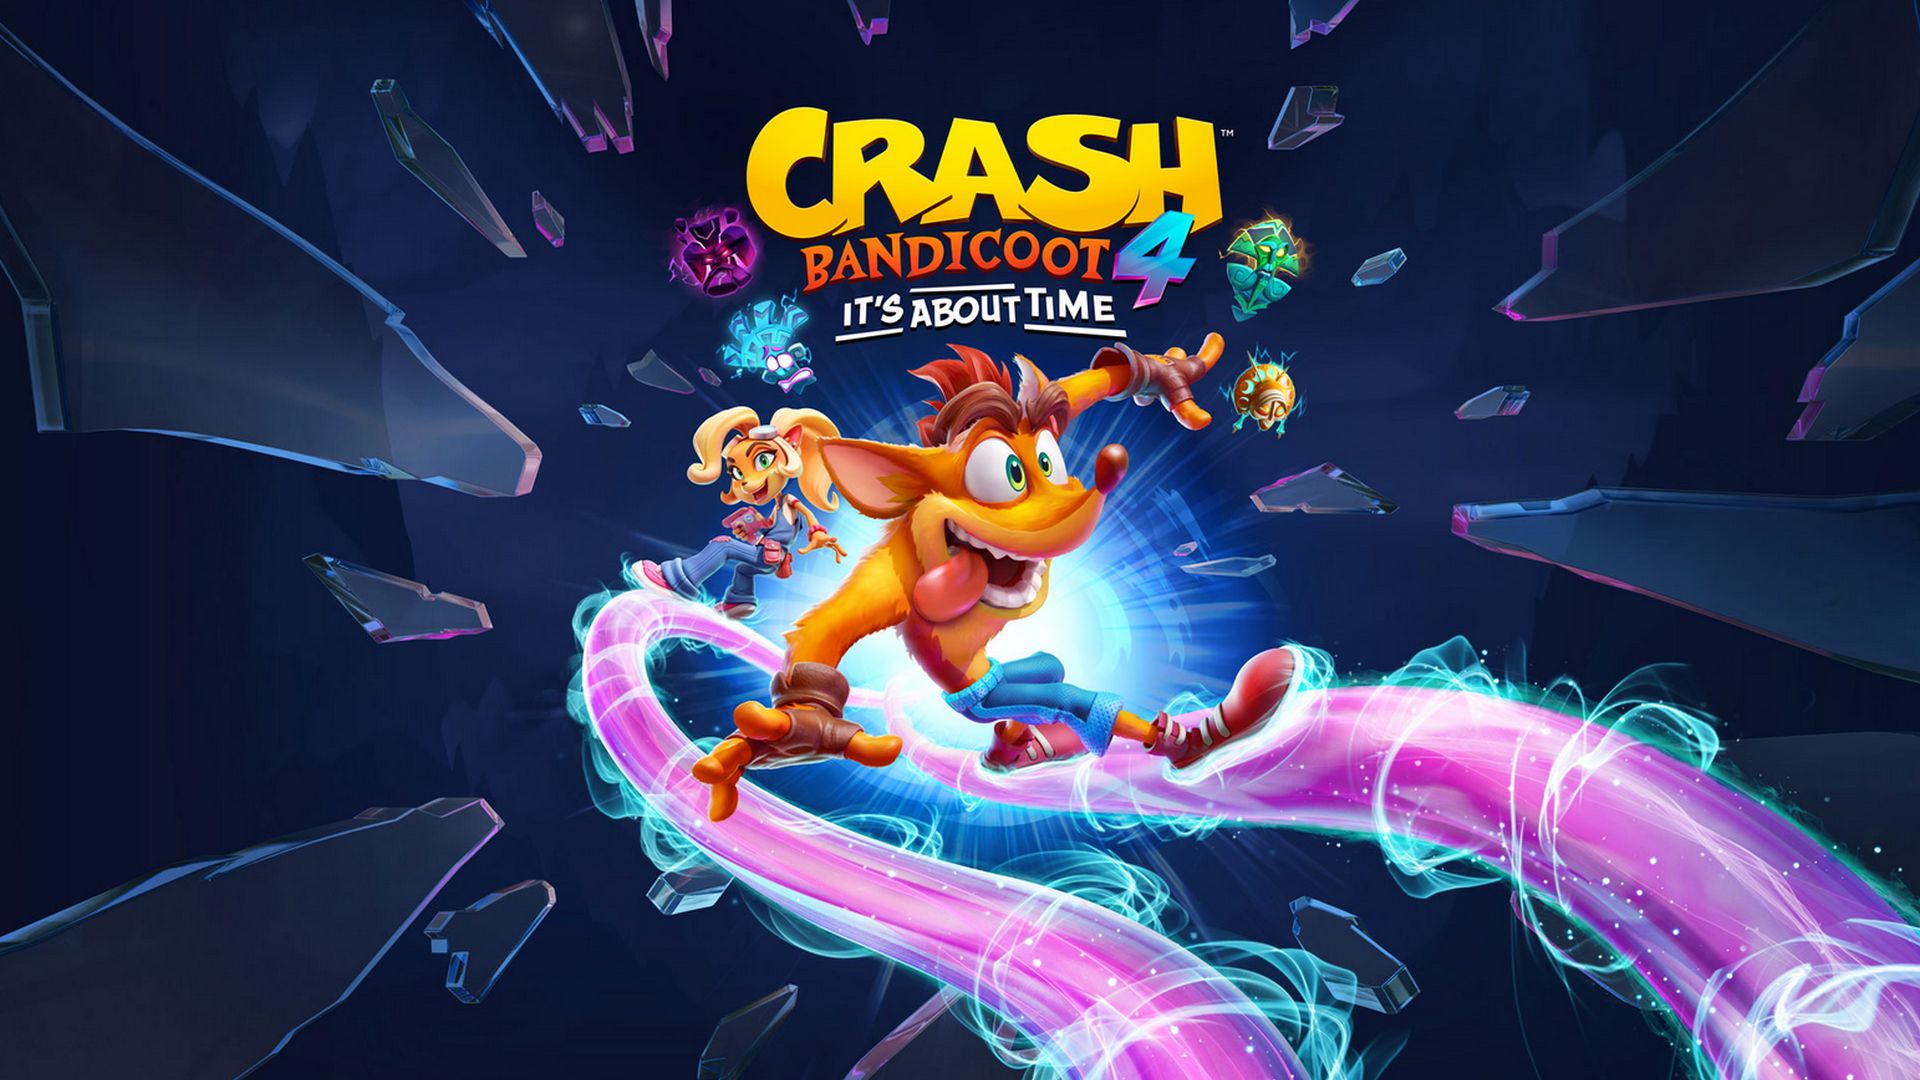 Crash Bandicoot 4 E pili ana i ka manawa